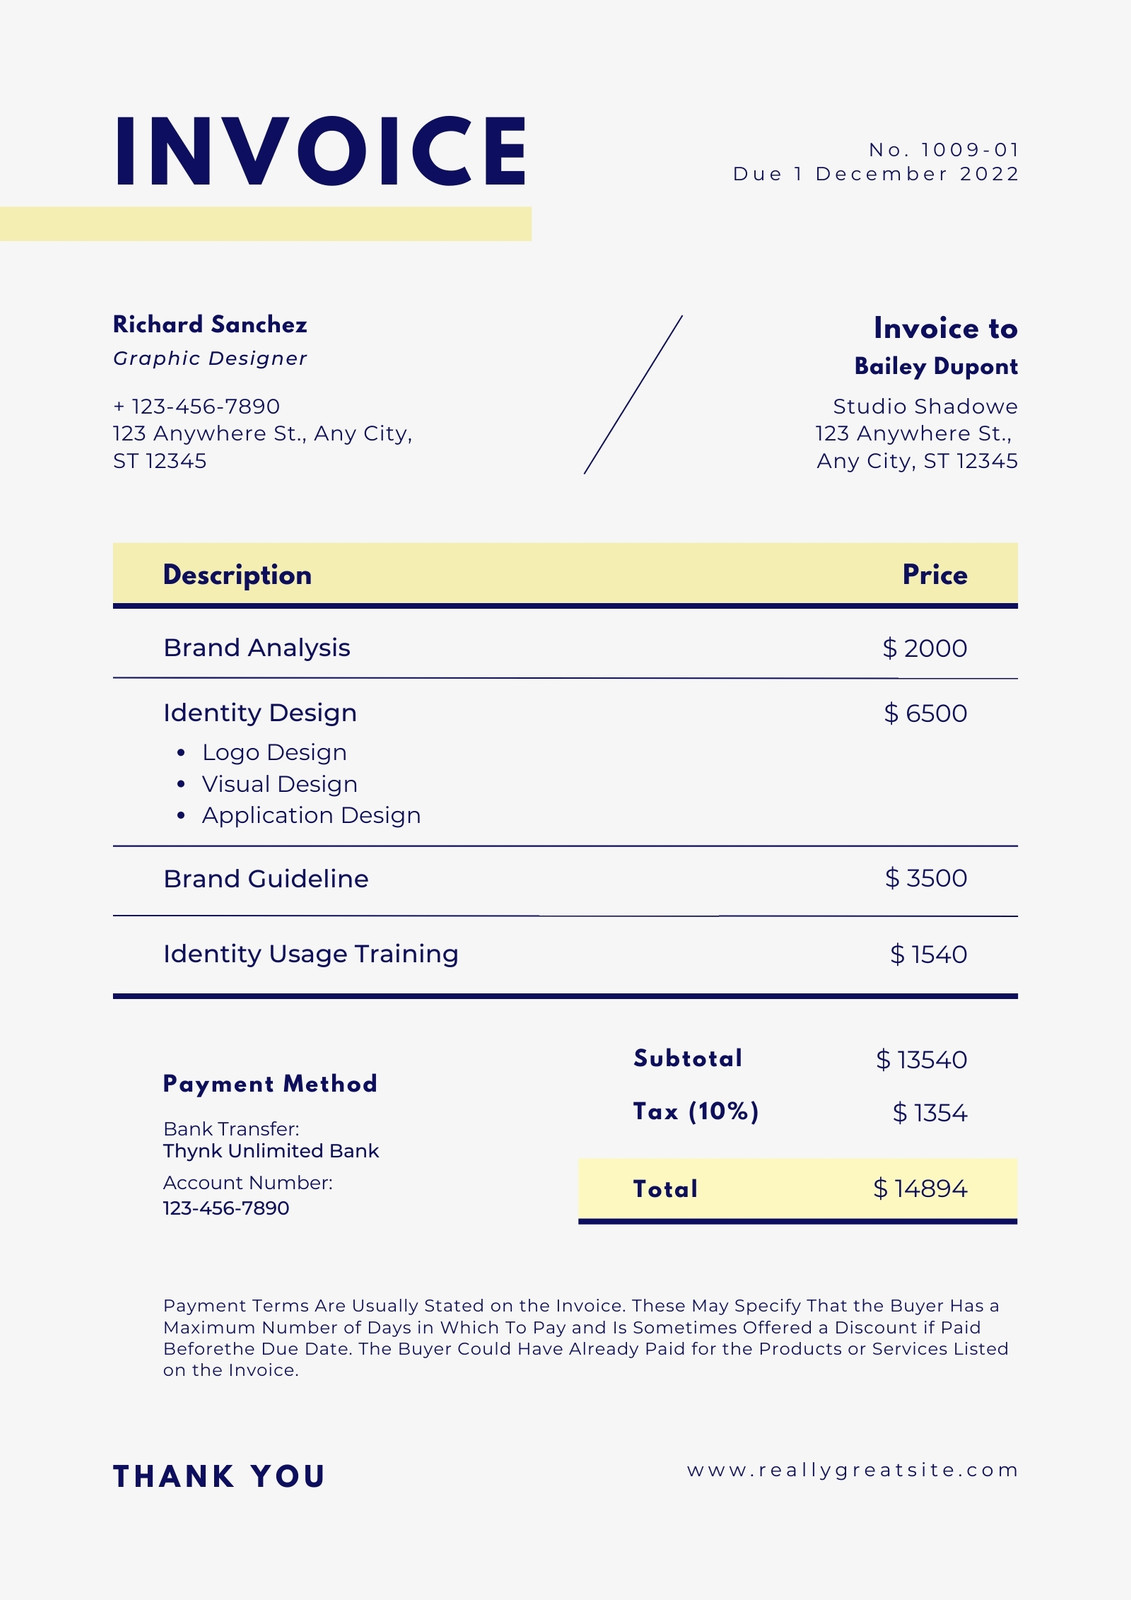 Free printable, customizable service invoice templates | Canva